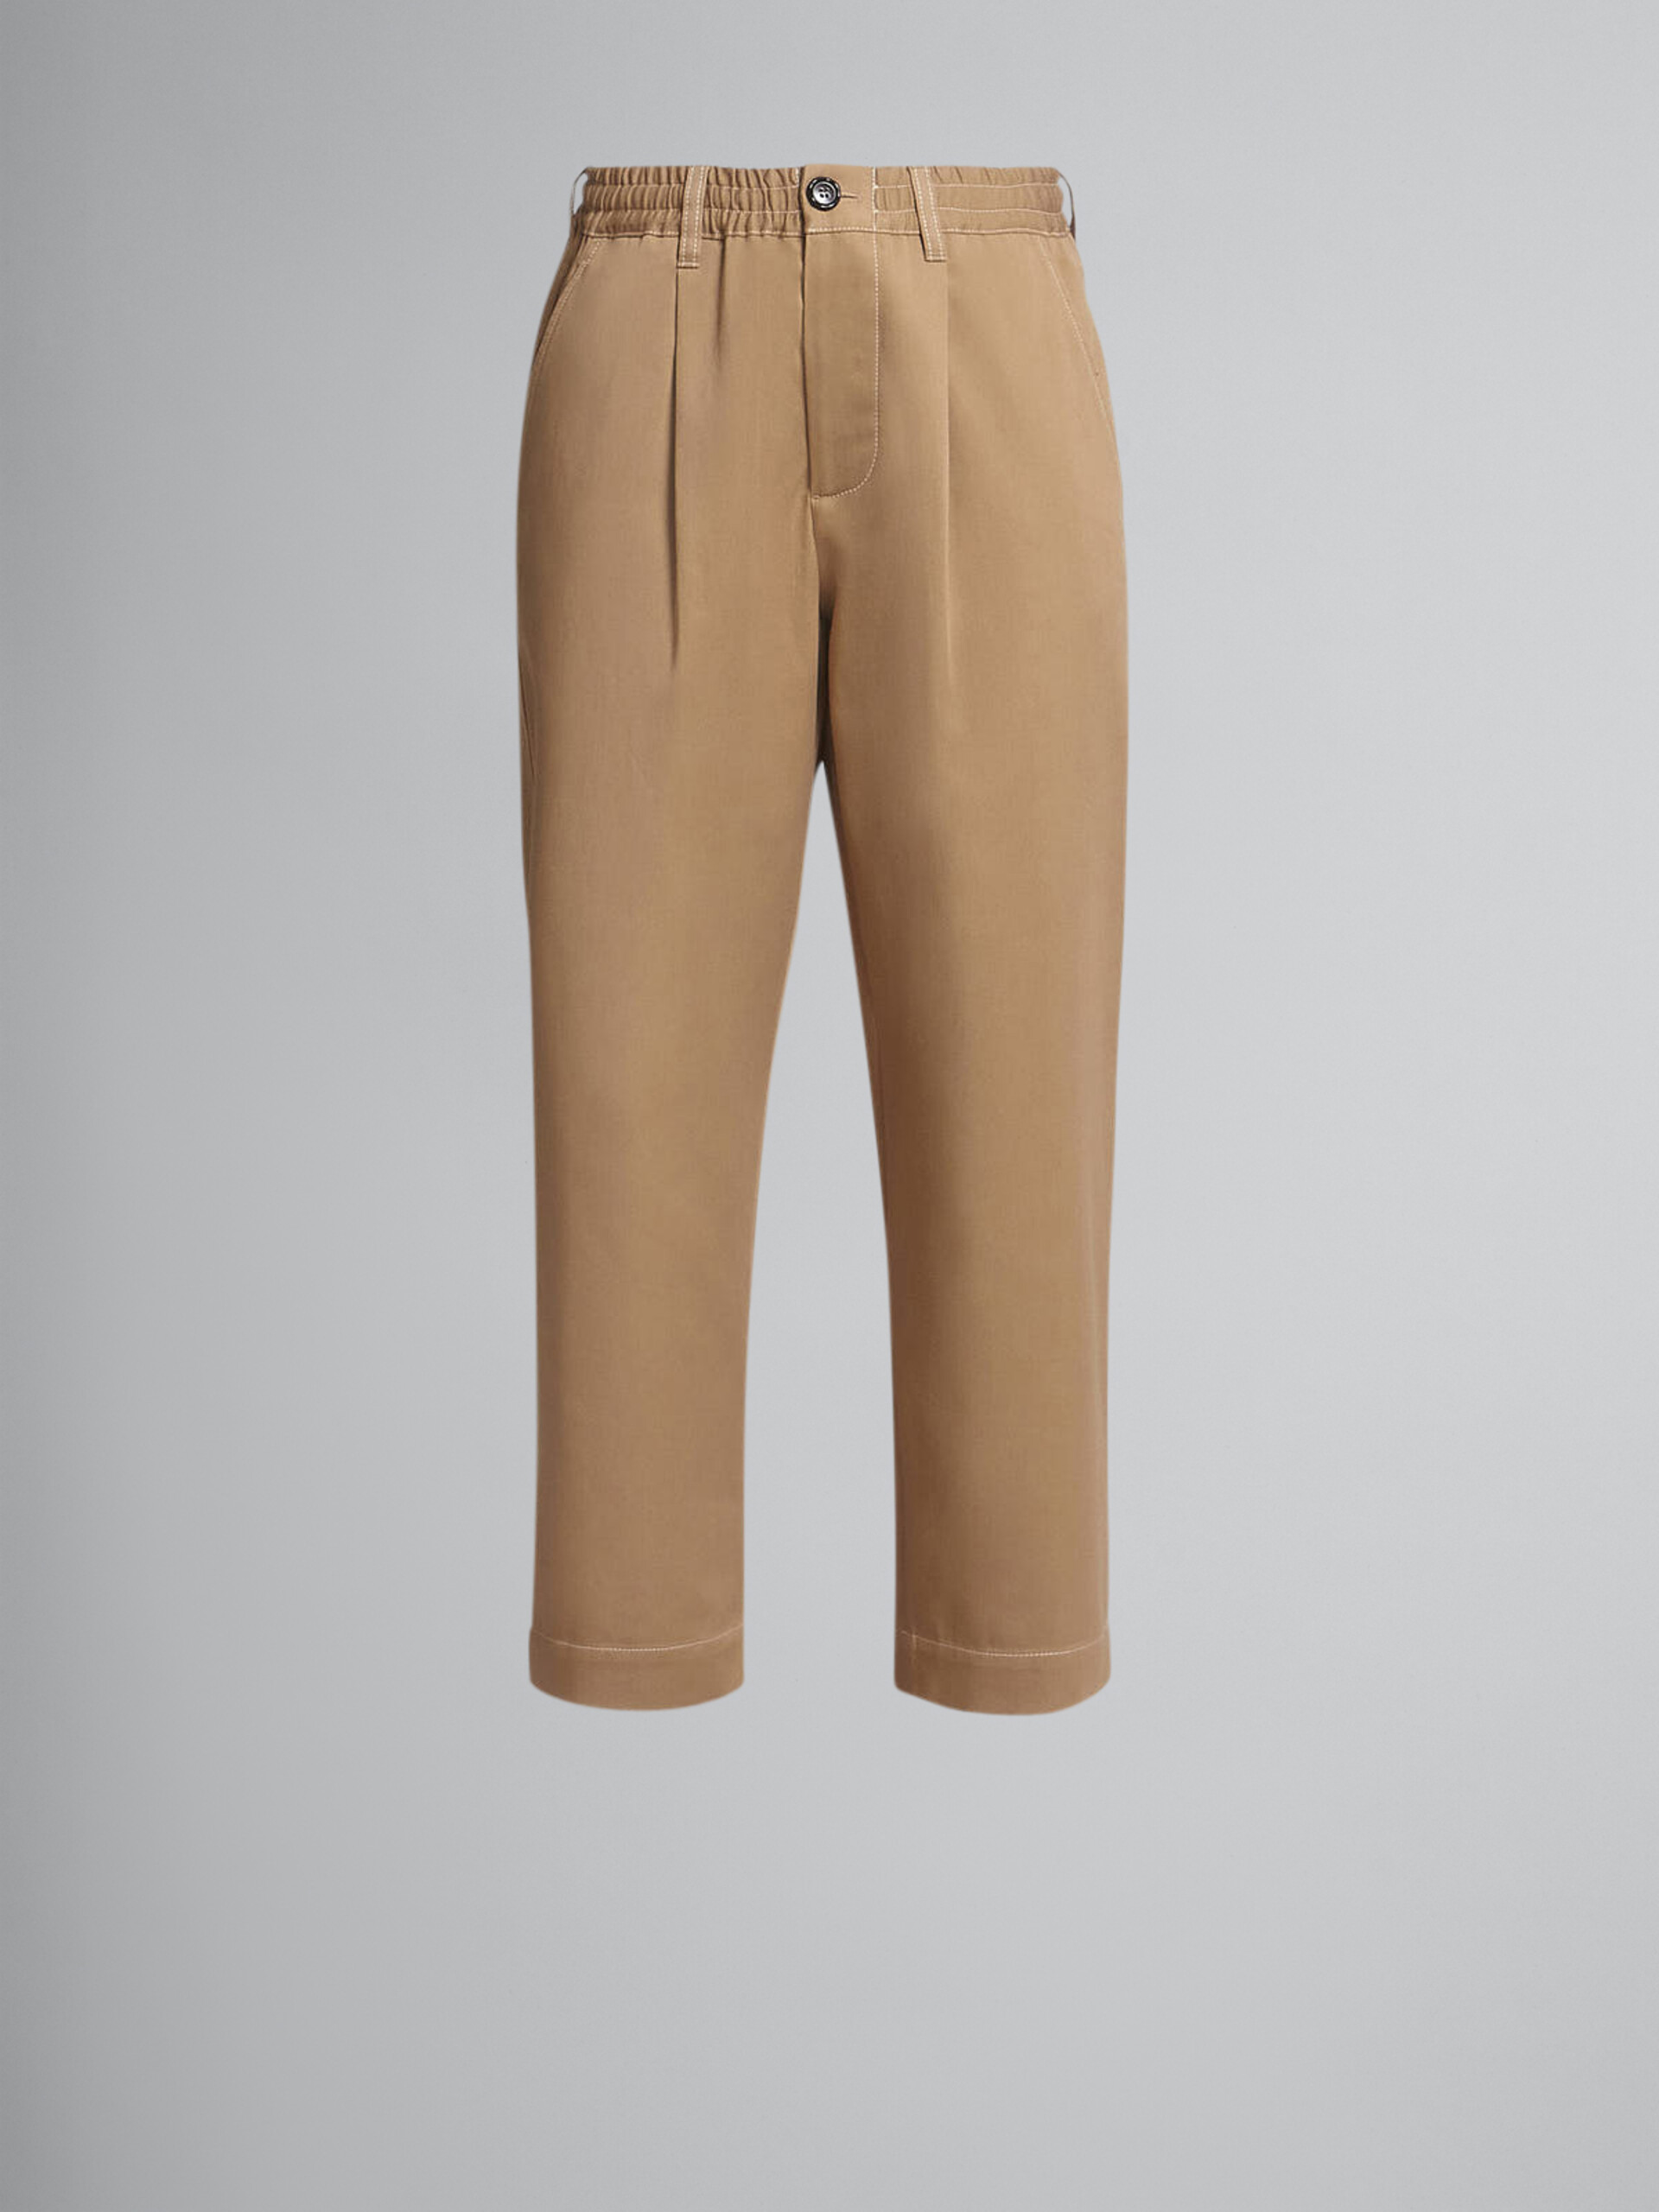 Cotton gabardine cropped pants - Pants - Image 1